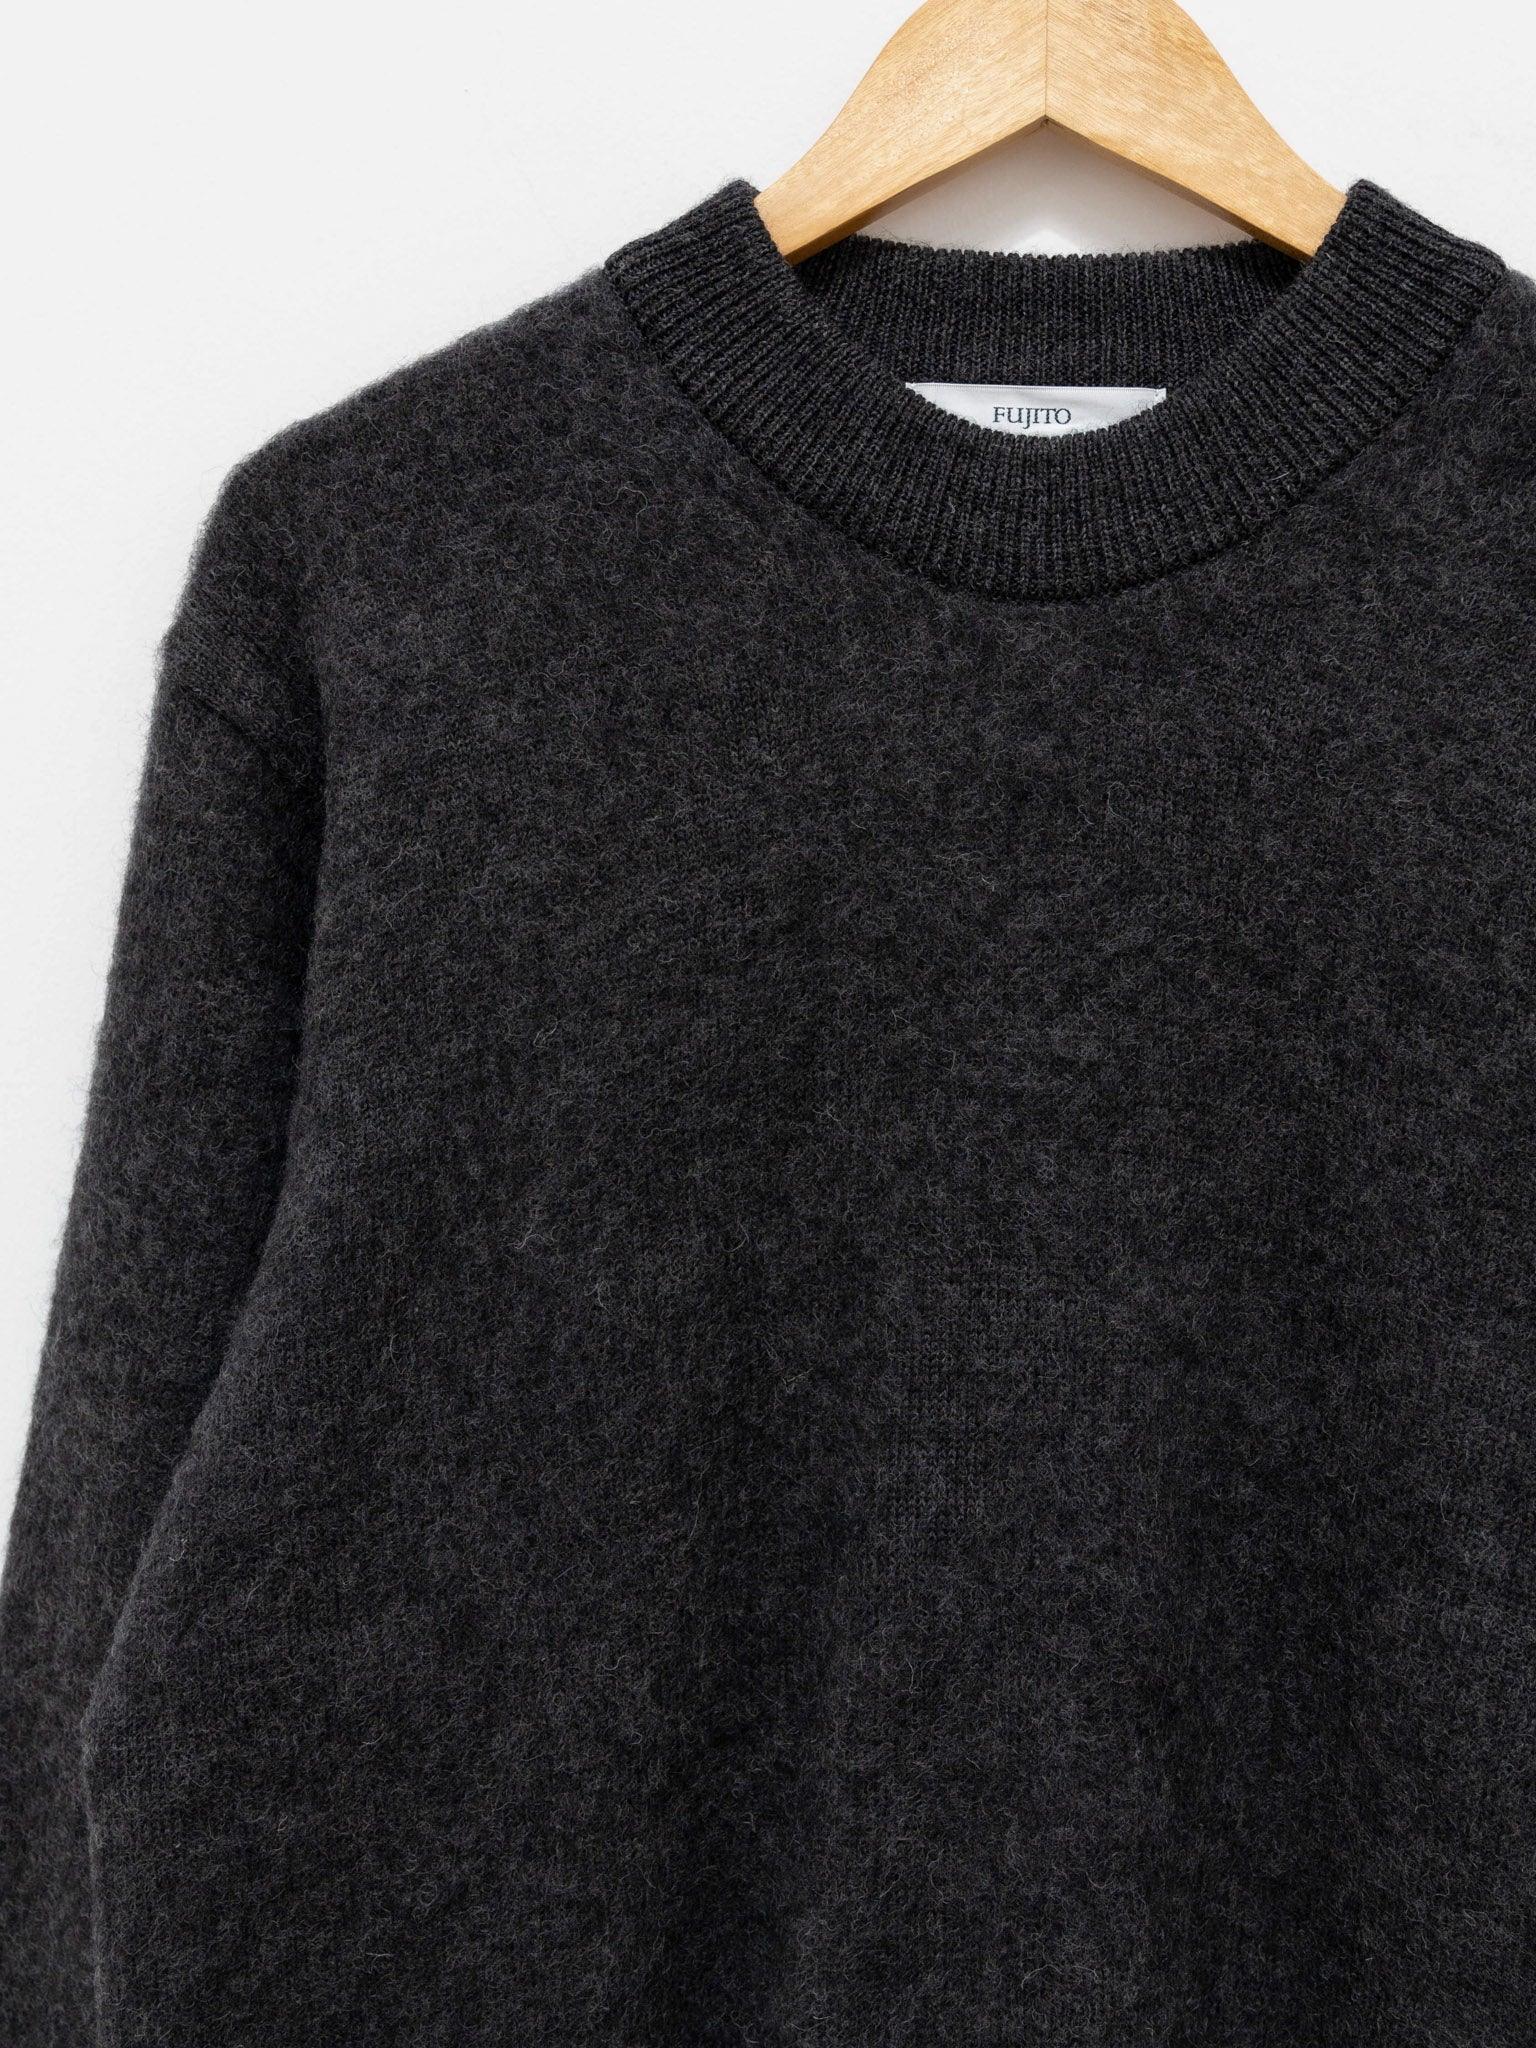 Namu Shop - Fujito C/N Knit Sweater - Charcoal